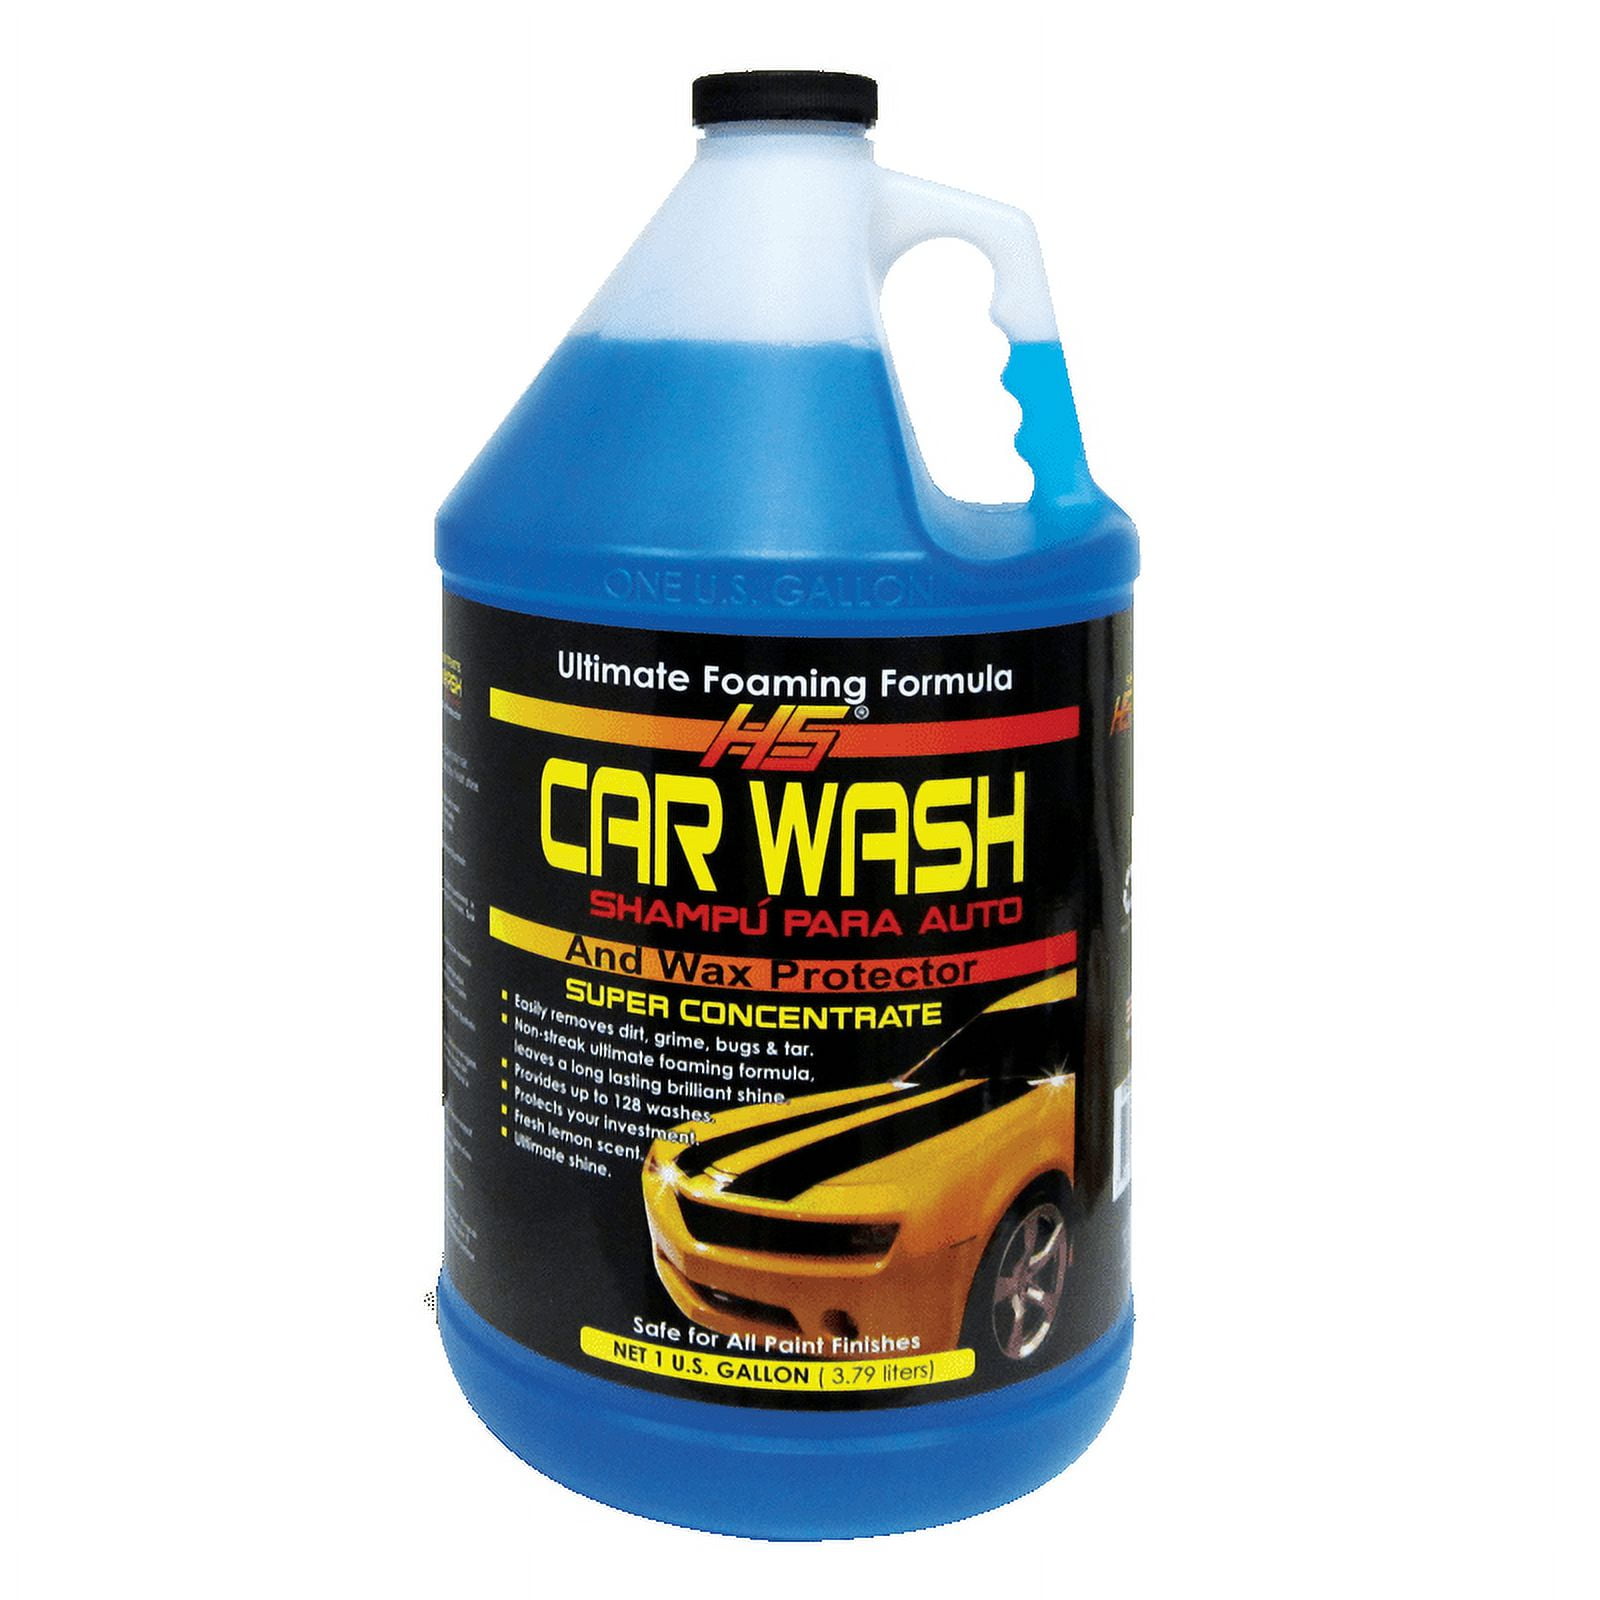 3 In 1 Quick Coating Spray High Protection Shine Ceramic Car Wash Car  Shield Coating Cleaning Nano Polishing Paint Wax - AliExpress